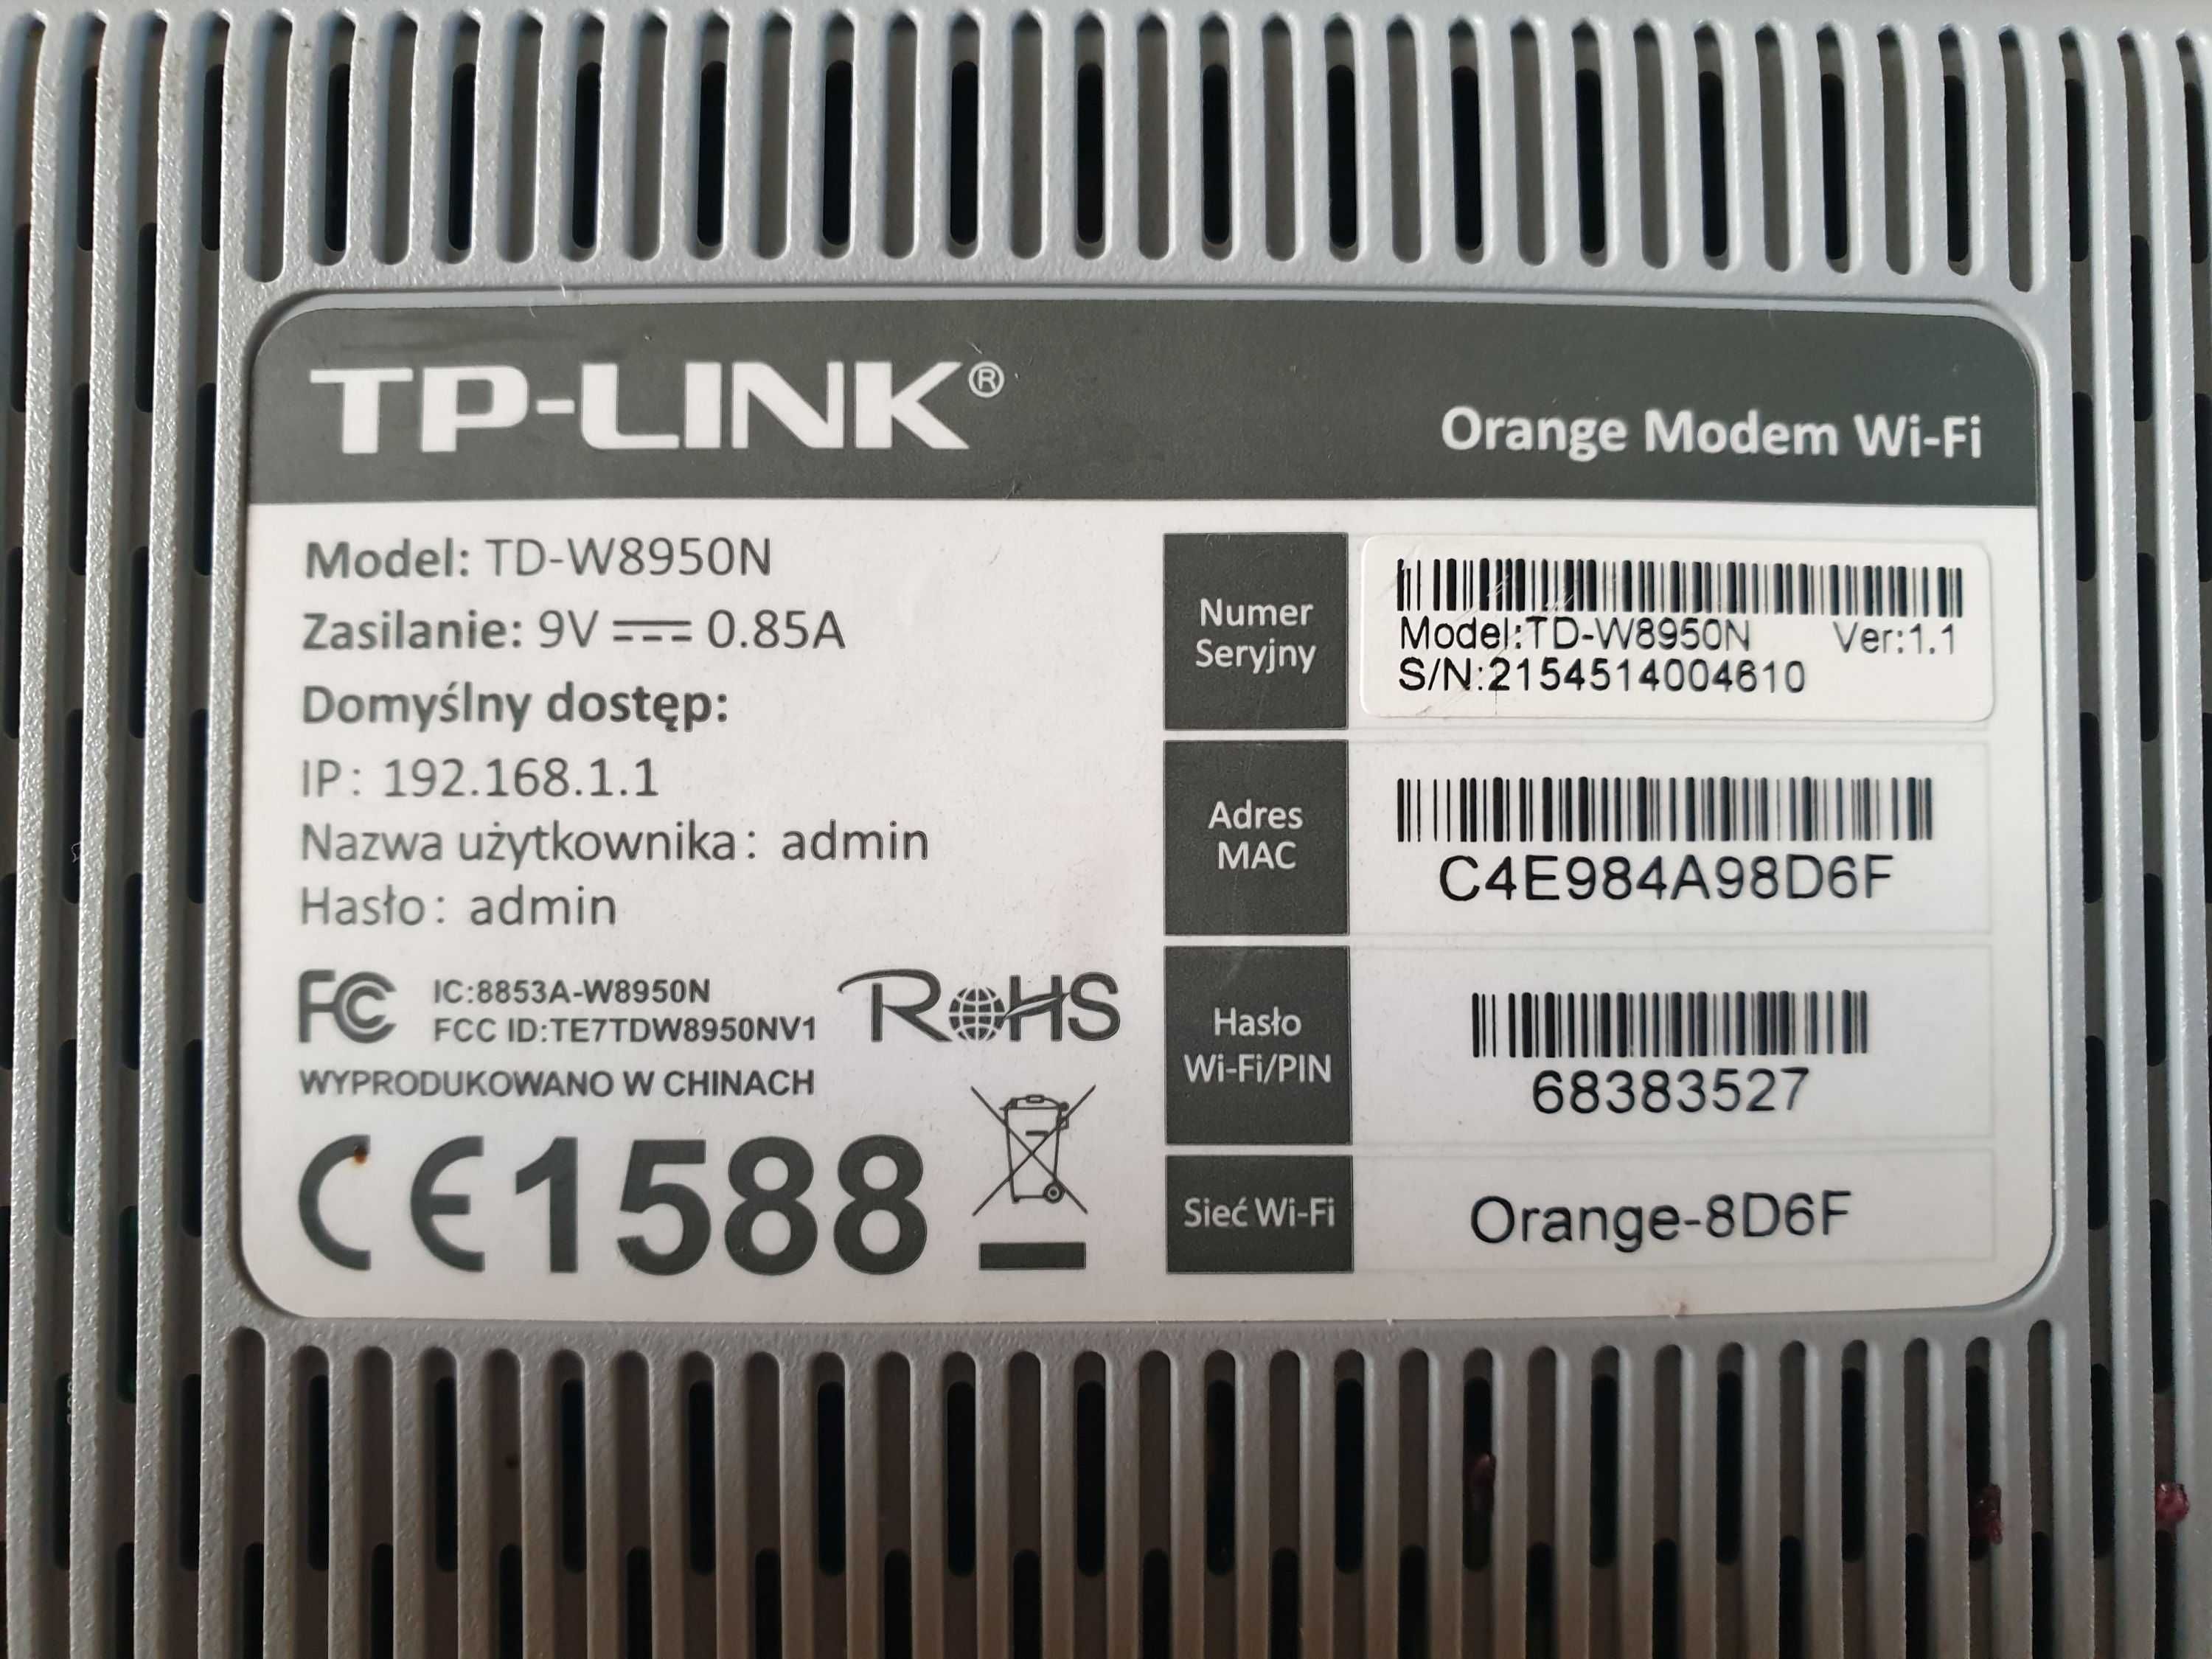 TP-LINK TD-W8961N router